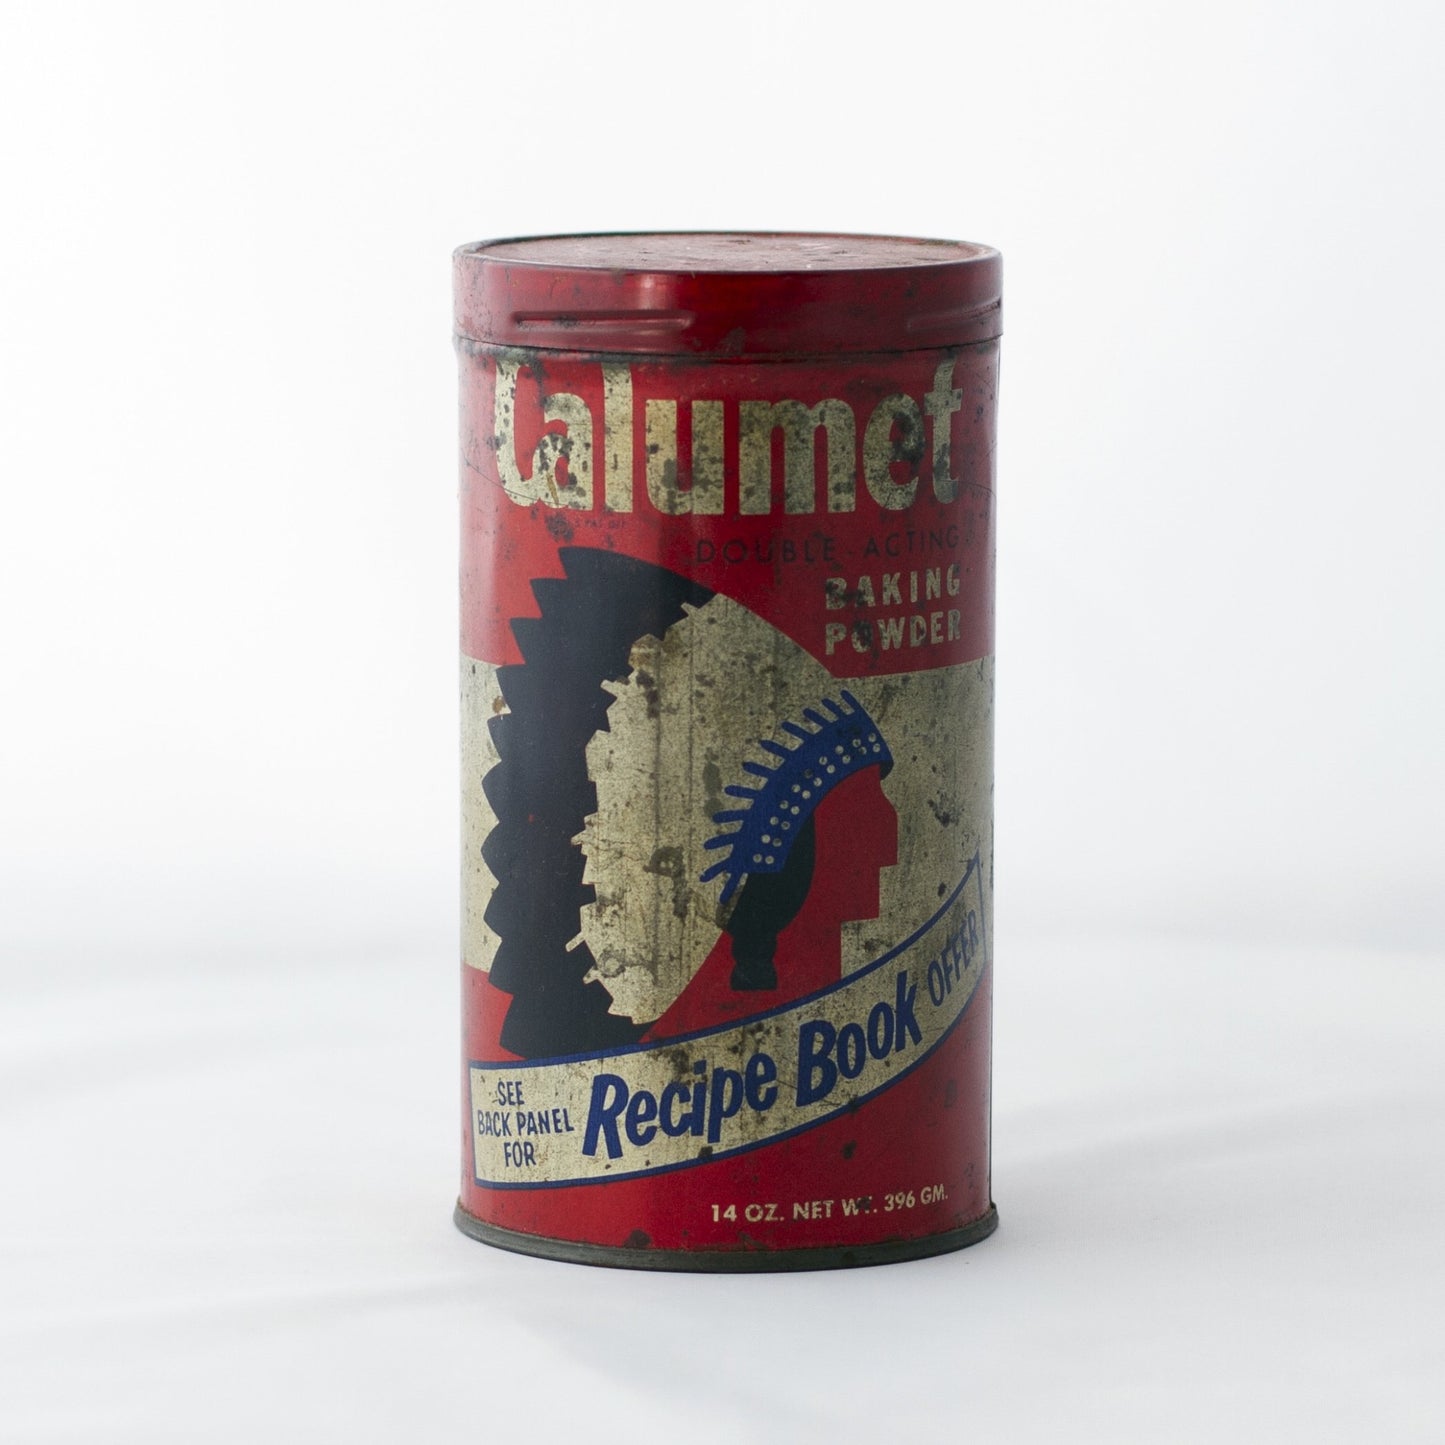 Calumet Baking Powder Tin 1960s